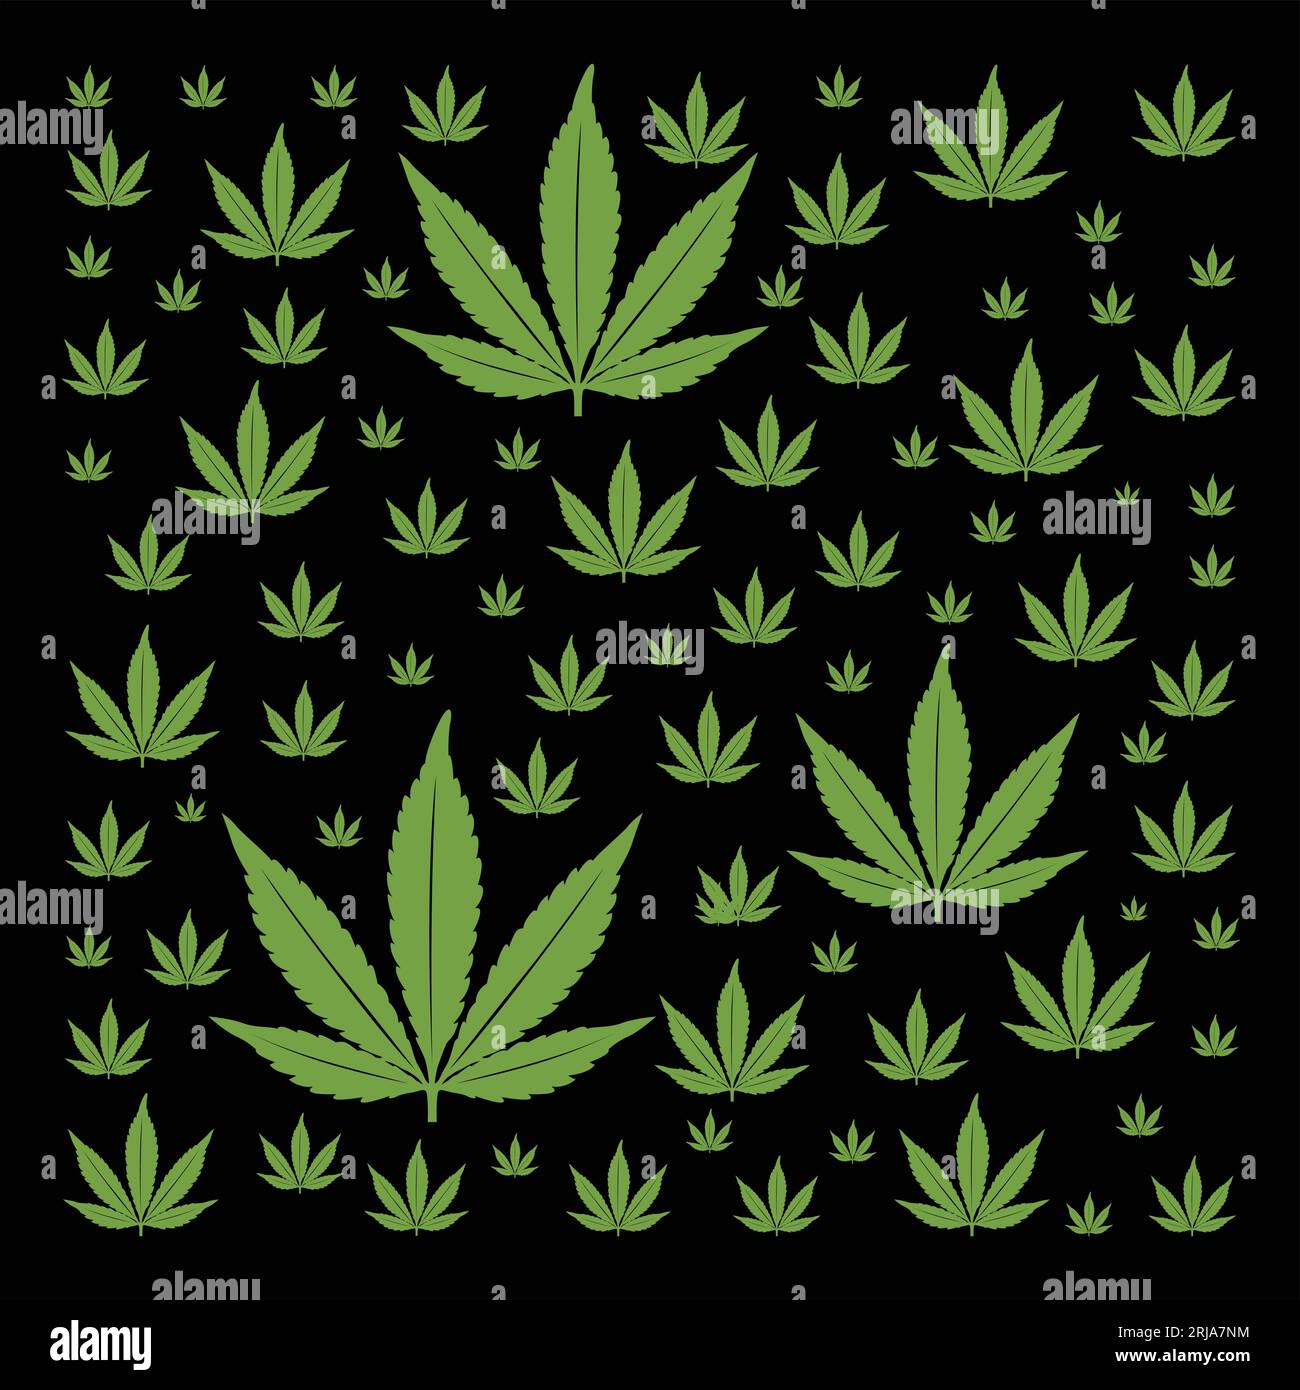 Marijuana Cannabis Leaf Pattern For Fabric Motifs Or Bandana Design Vector Stock Vector